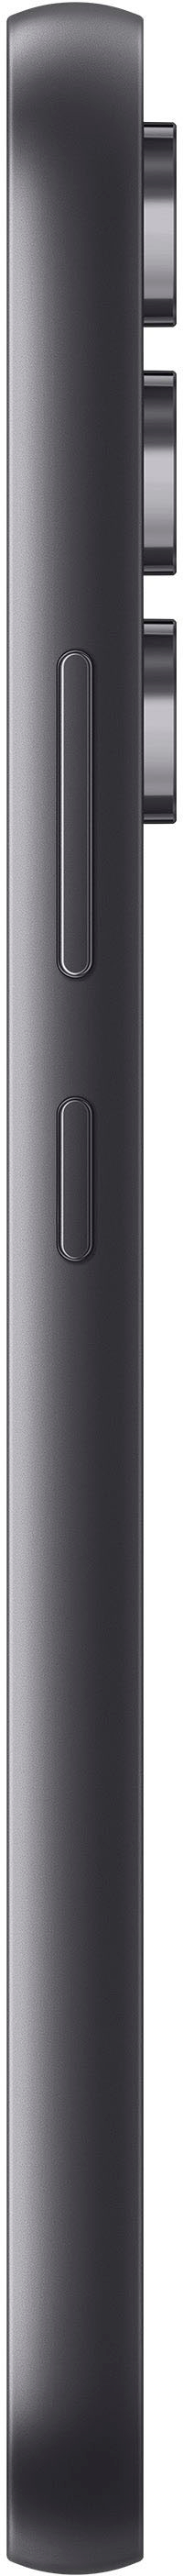 Achat Galaxy A54 5G Graphite 128 Go : Prix & Promotion